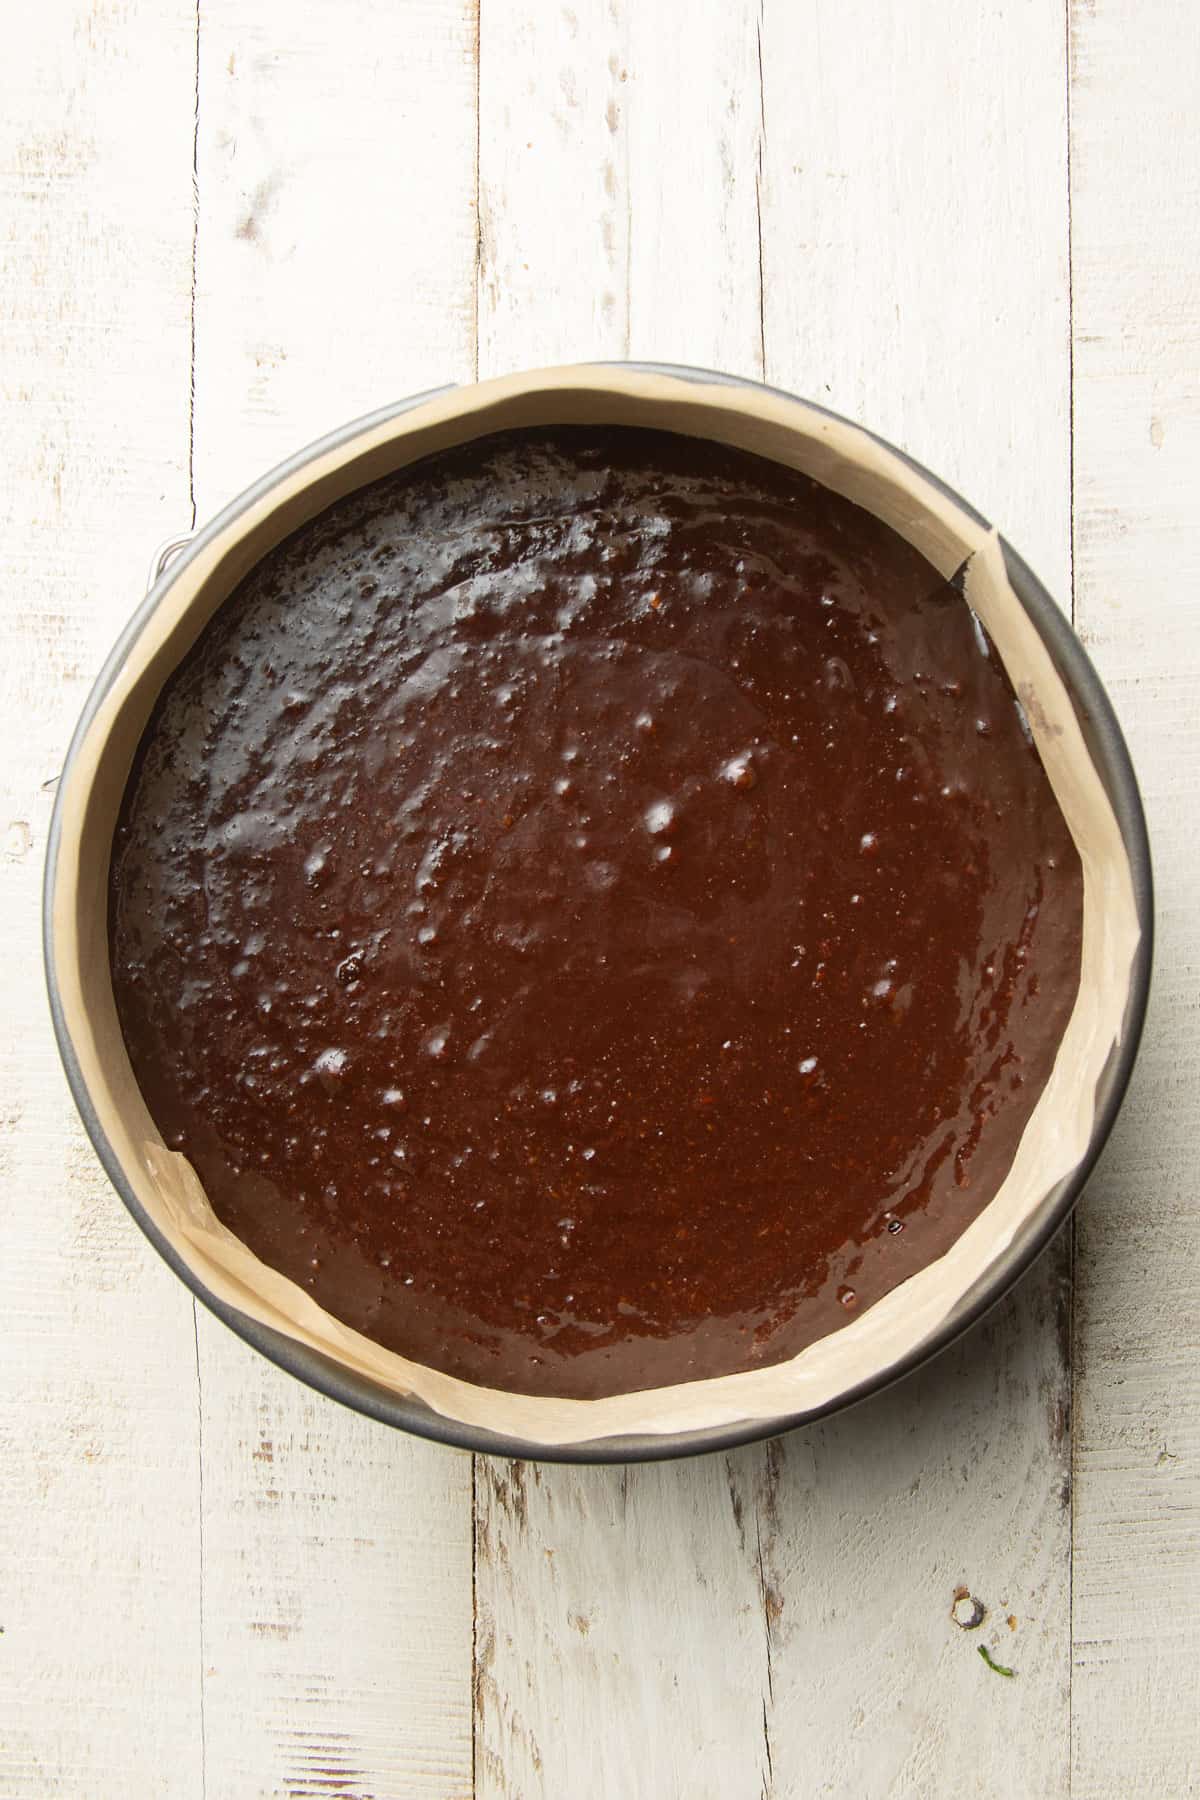 Vegan Chocolate Torte batter in a cake pan.